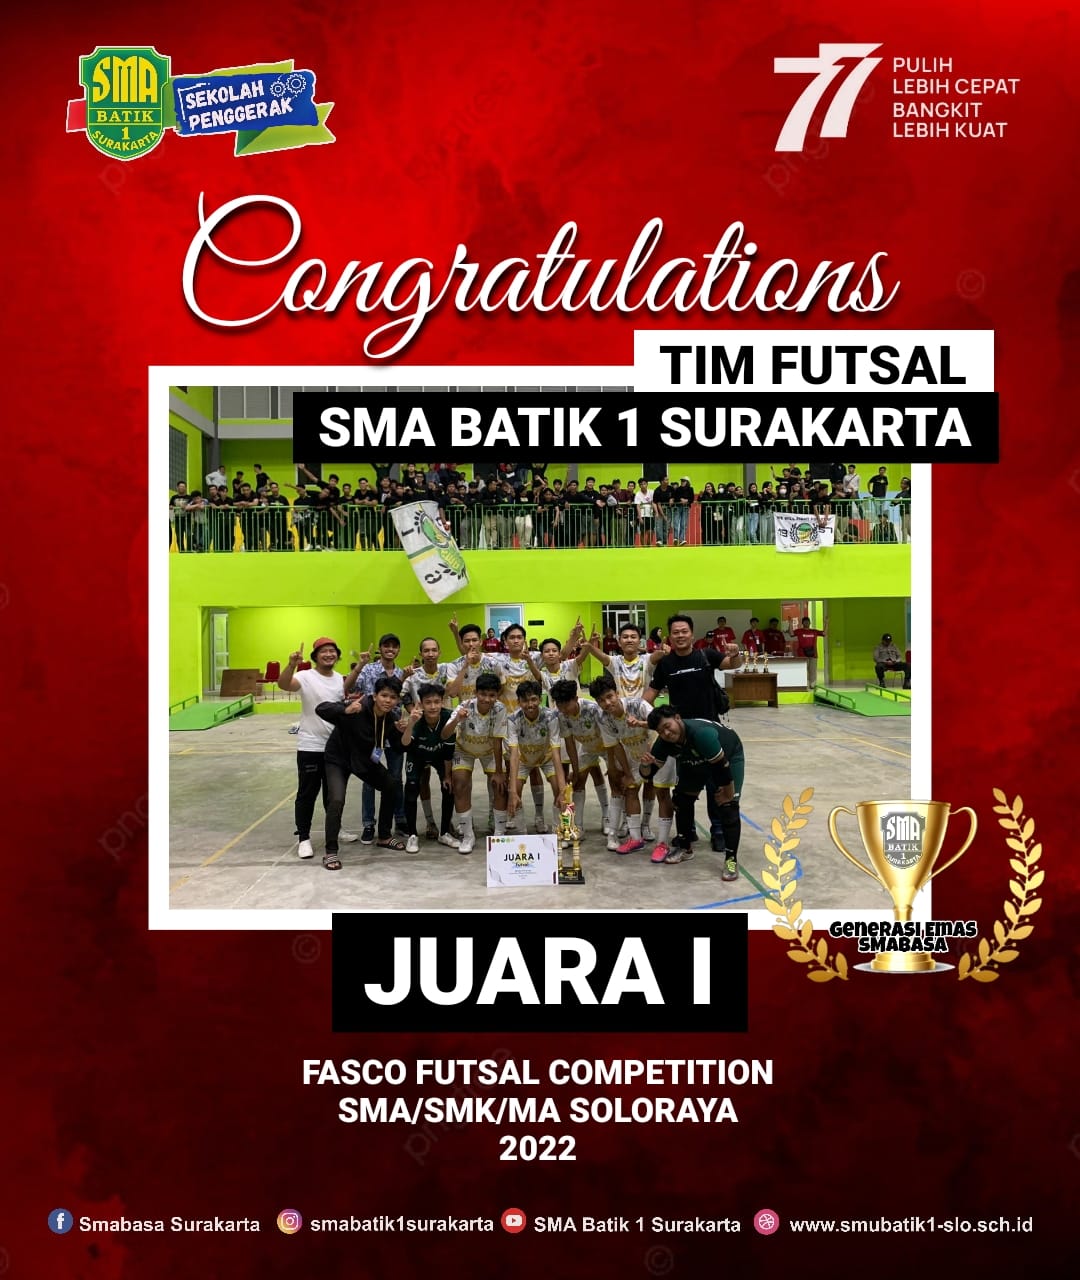 Juara 1. Fasco Futsal Competition 2022